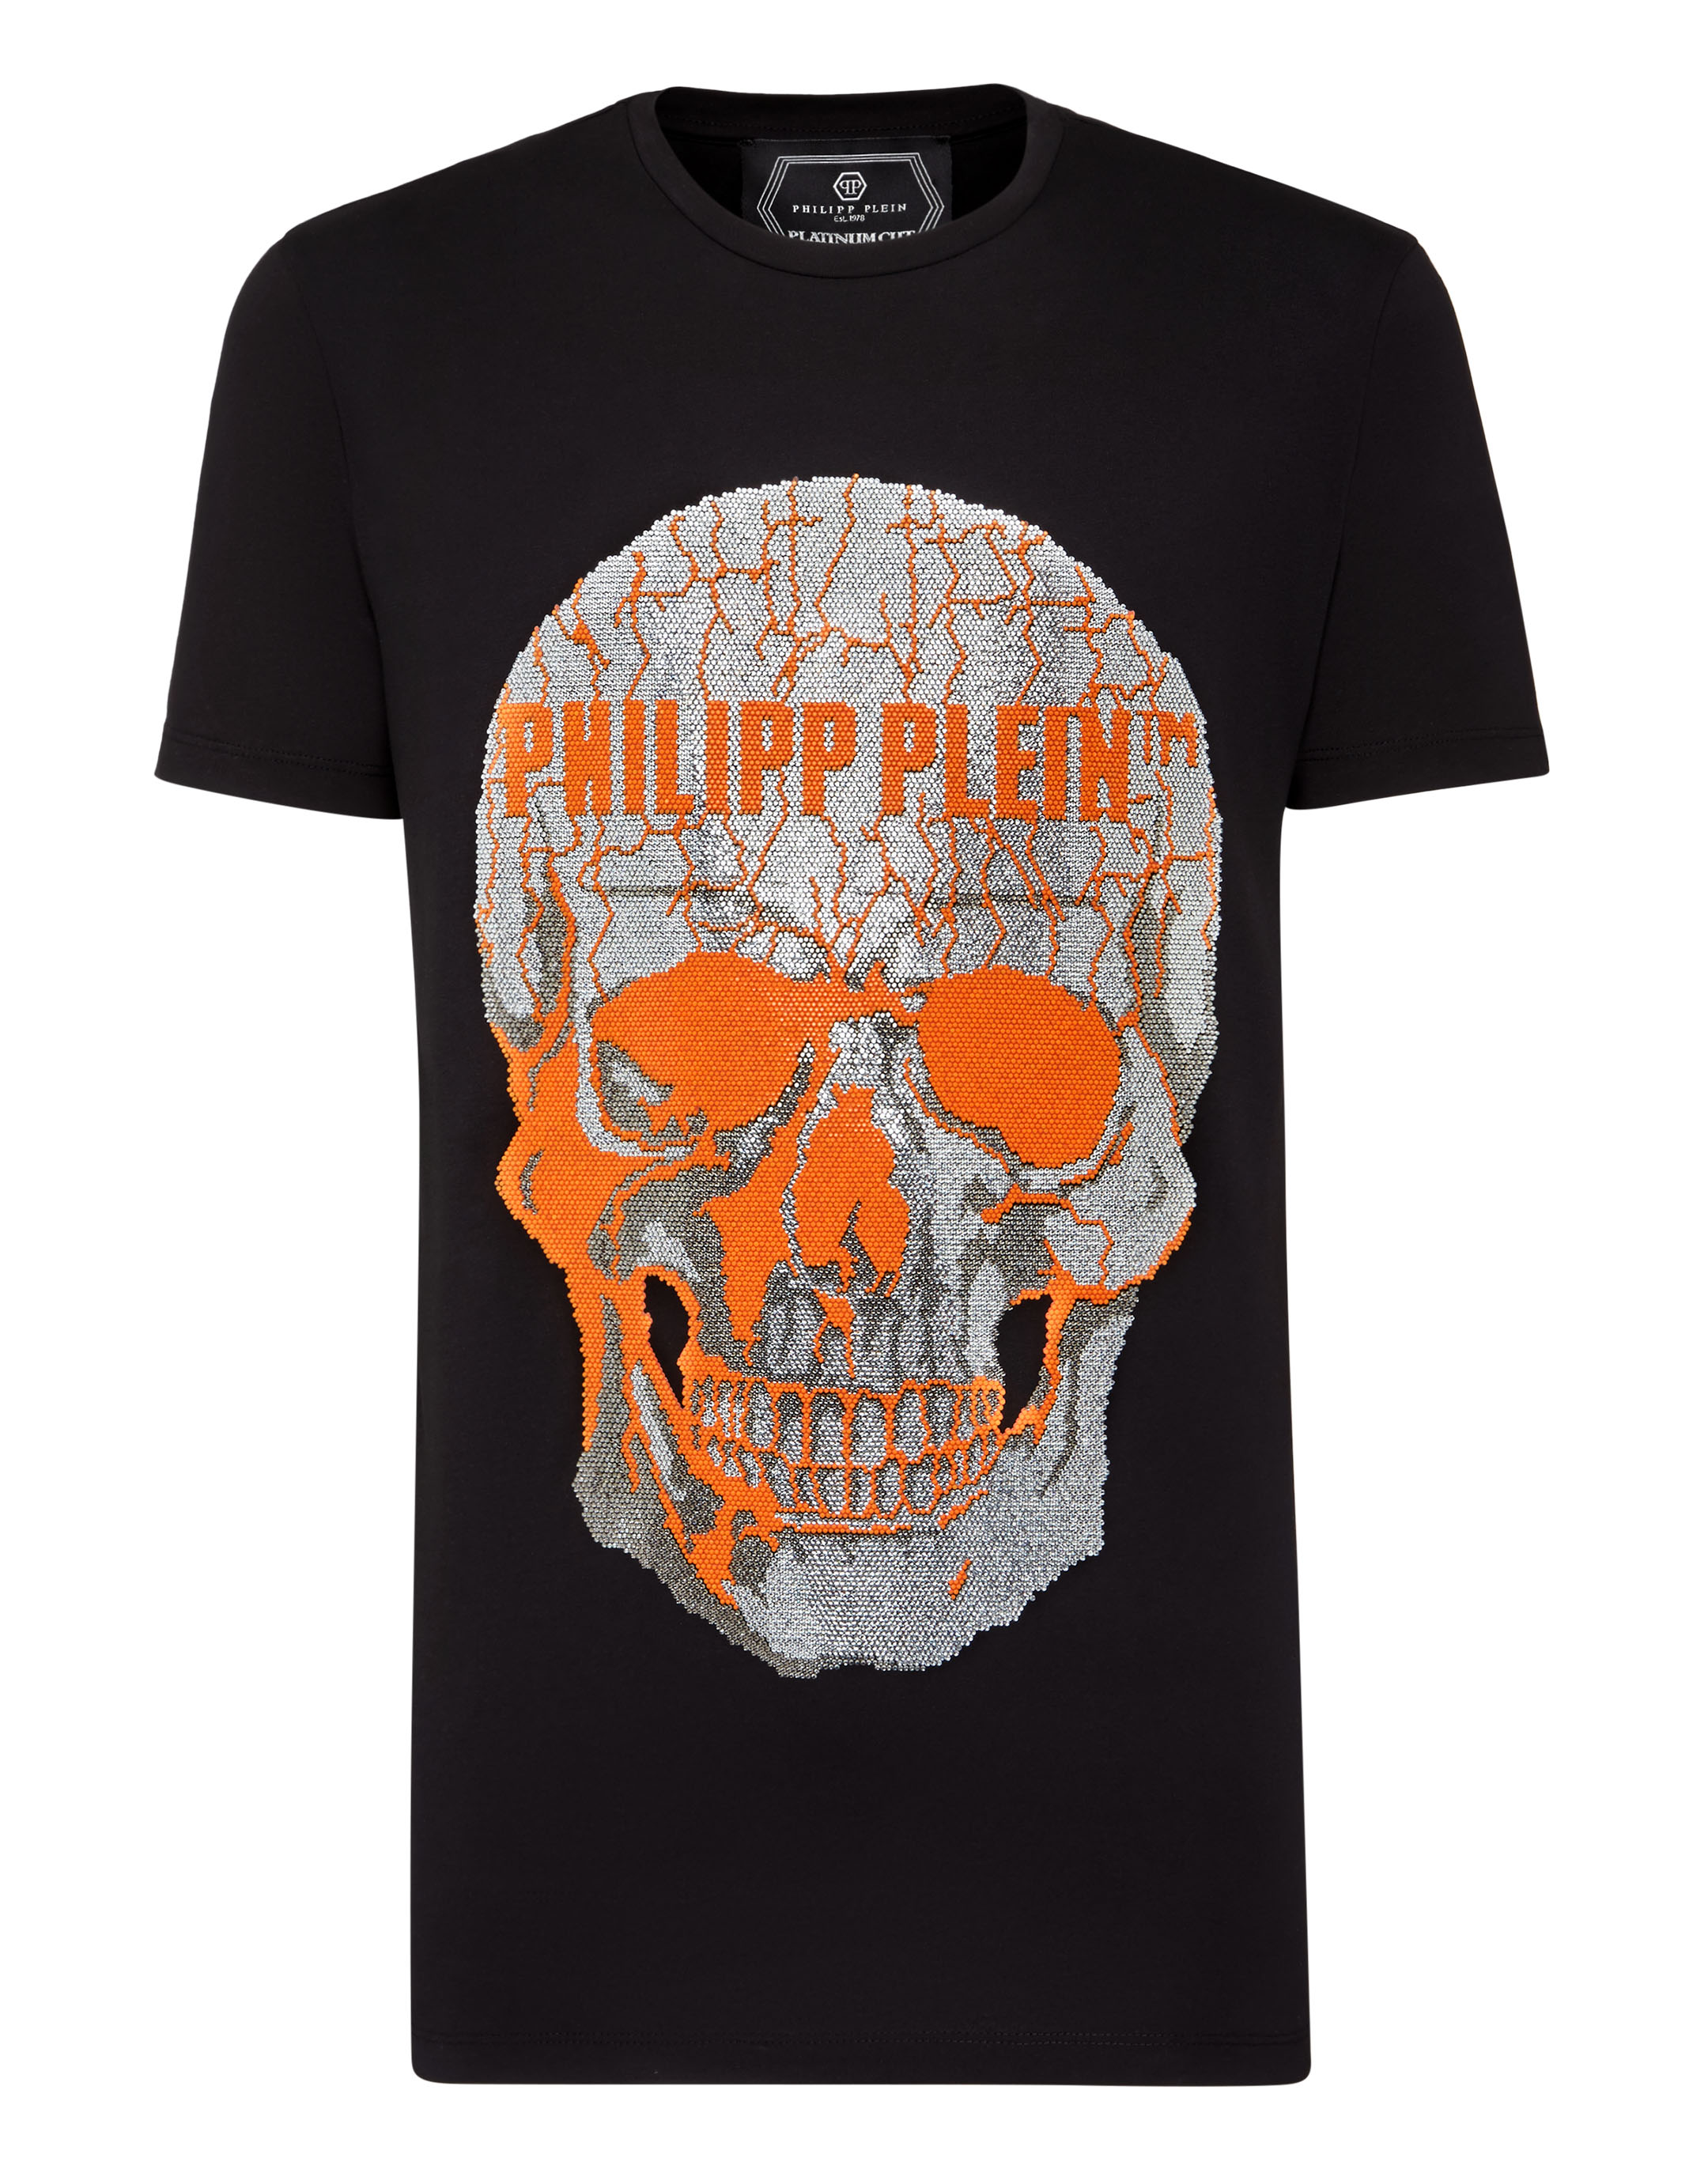 T Shirt Philipp Plein Factory Sale, 59% OFF | www.pegasusaerogroup.com